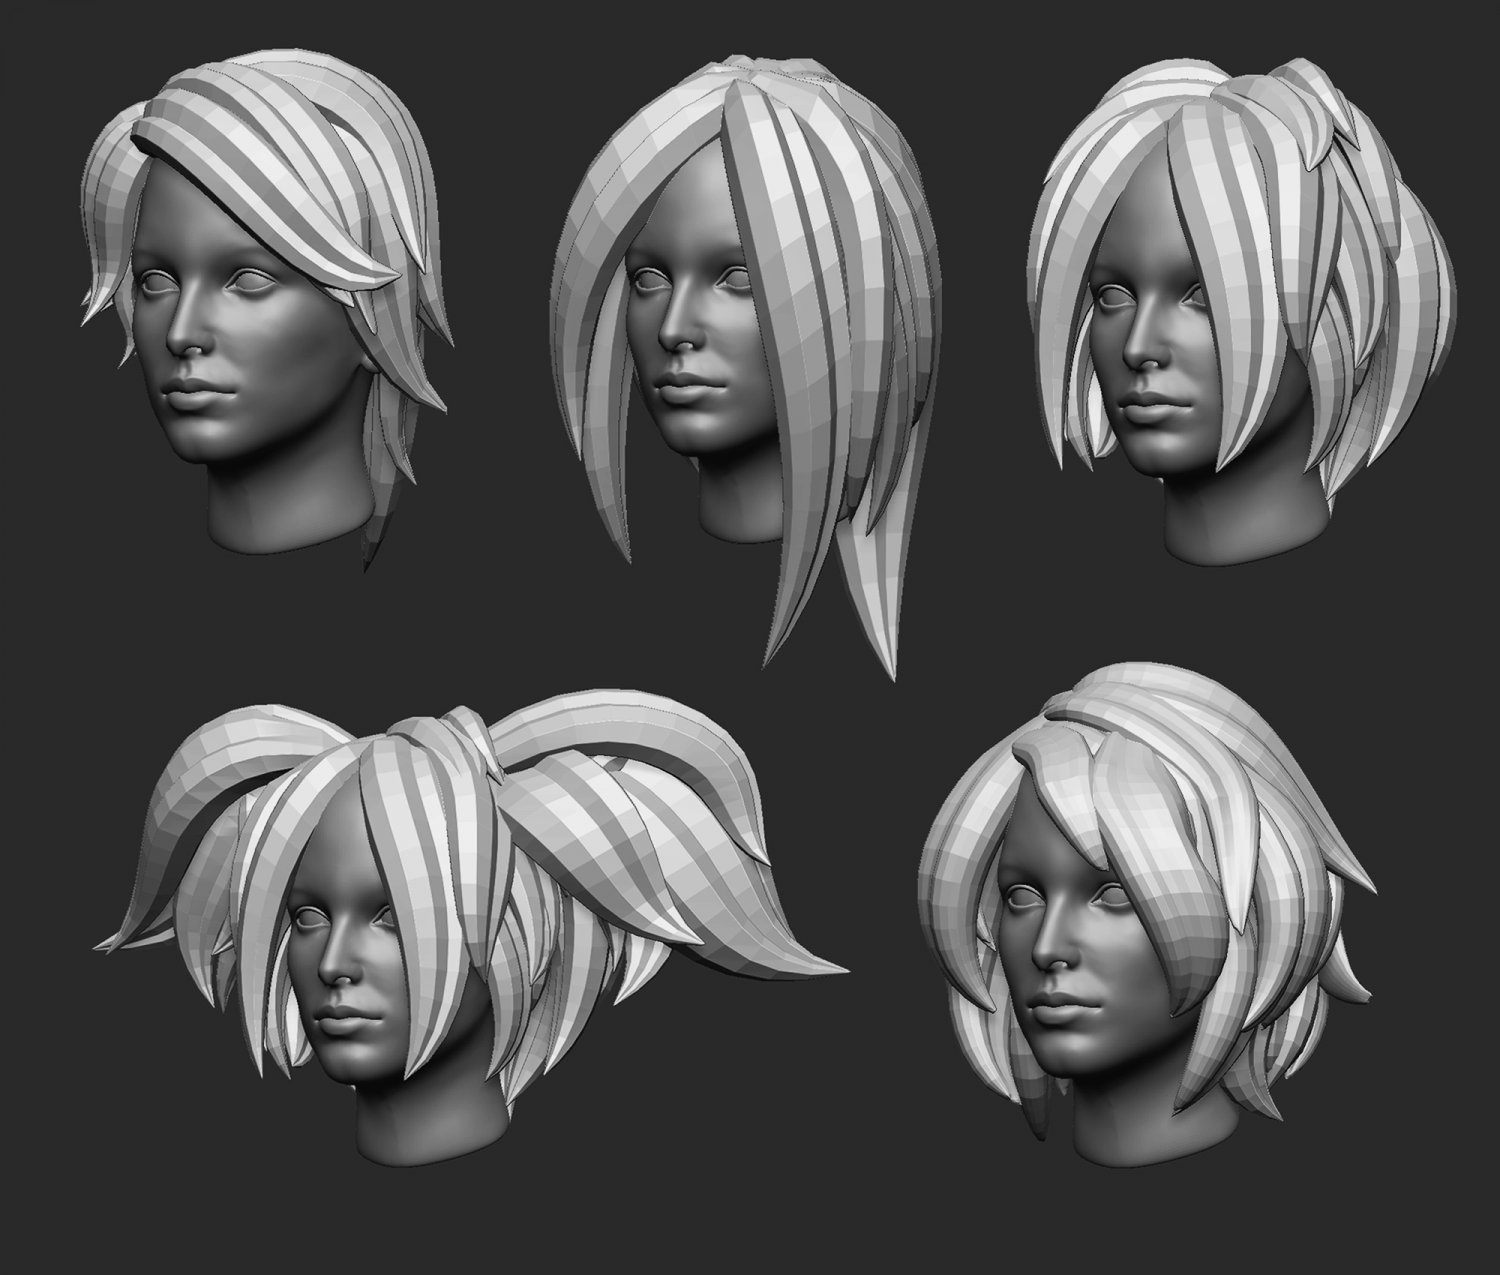 Female hair lowpoly 3D Model $15 - .3ds .fbx .obj .stl .max